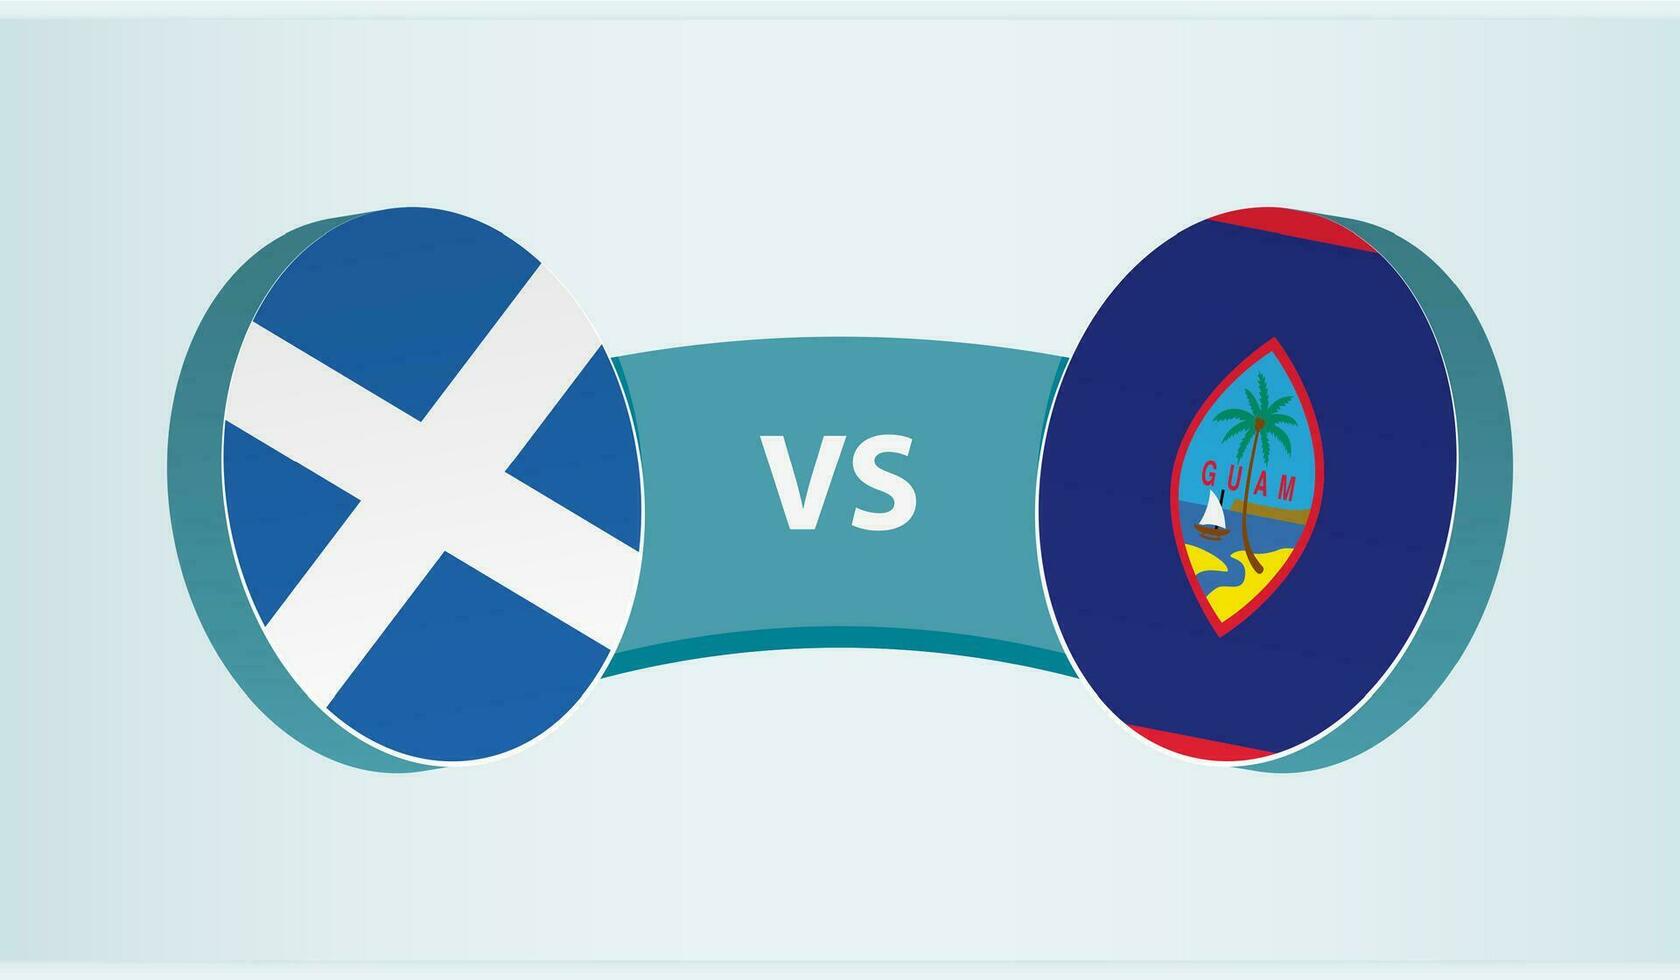 Scotland versus Guam, team sports competition concept. vector